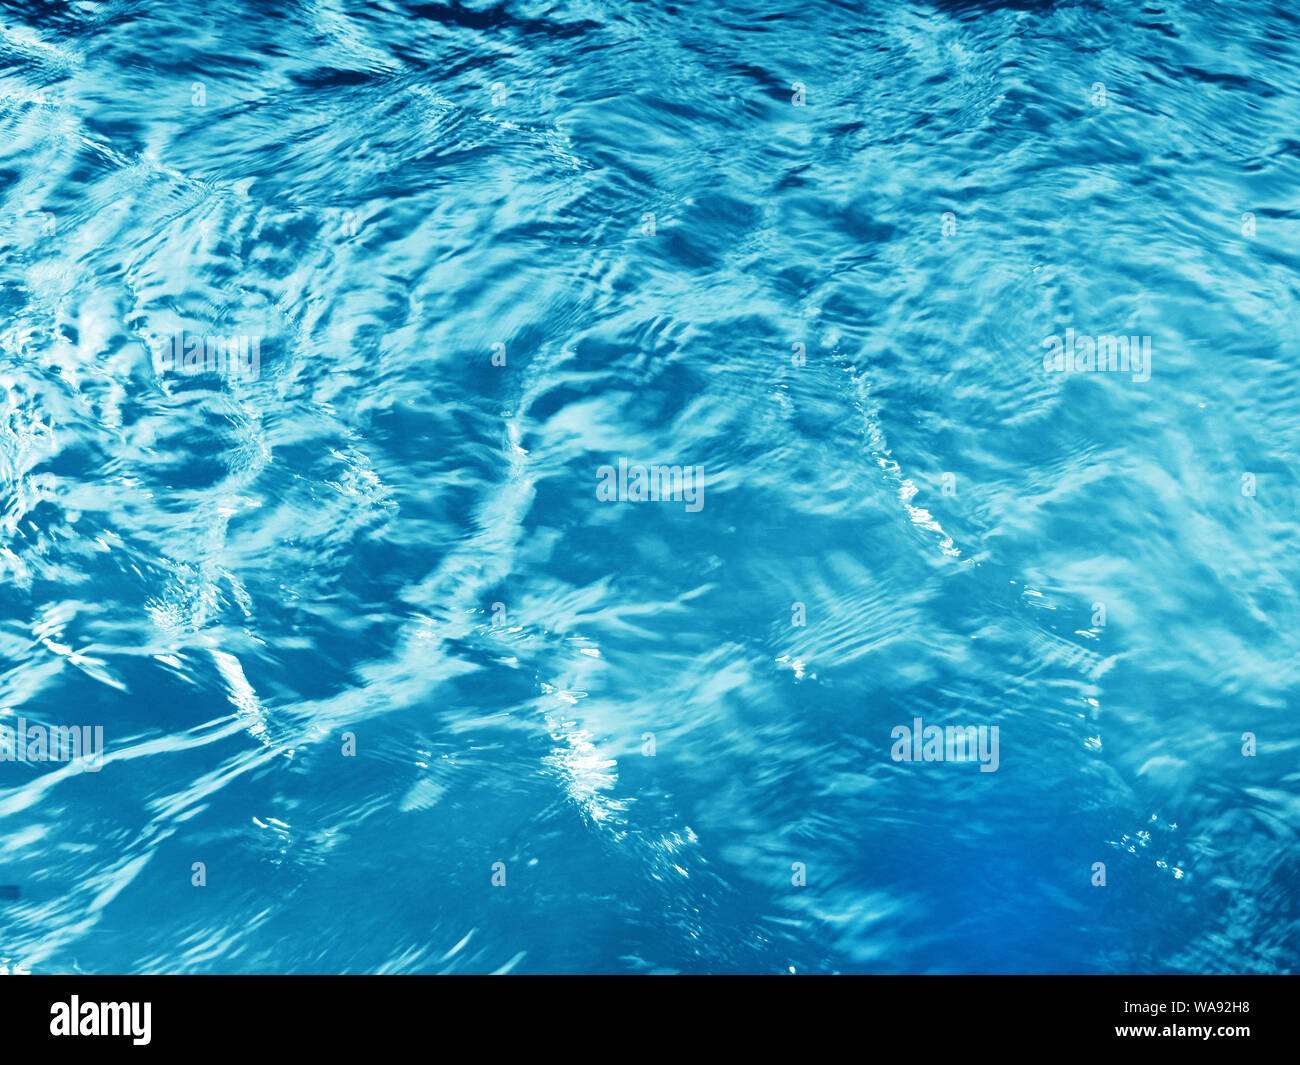 La texture de l'eau bleu foncé Banque D'Images